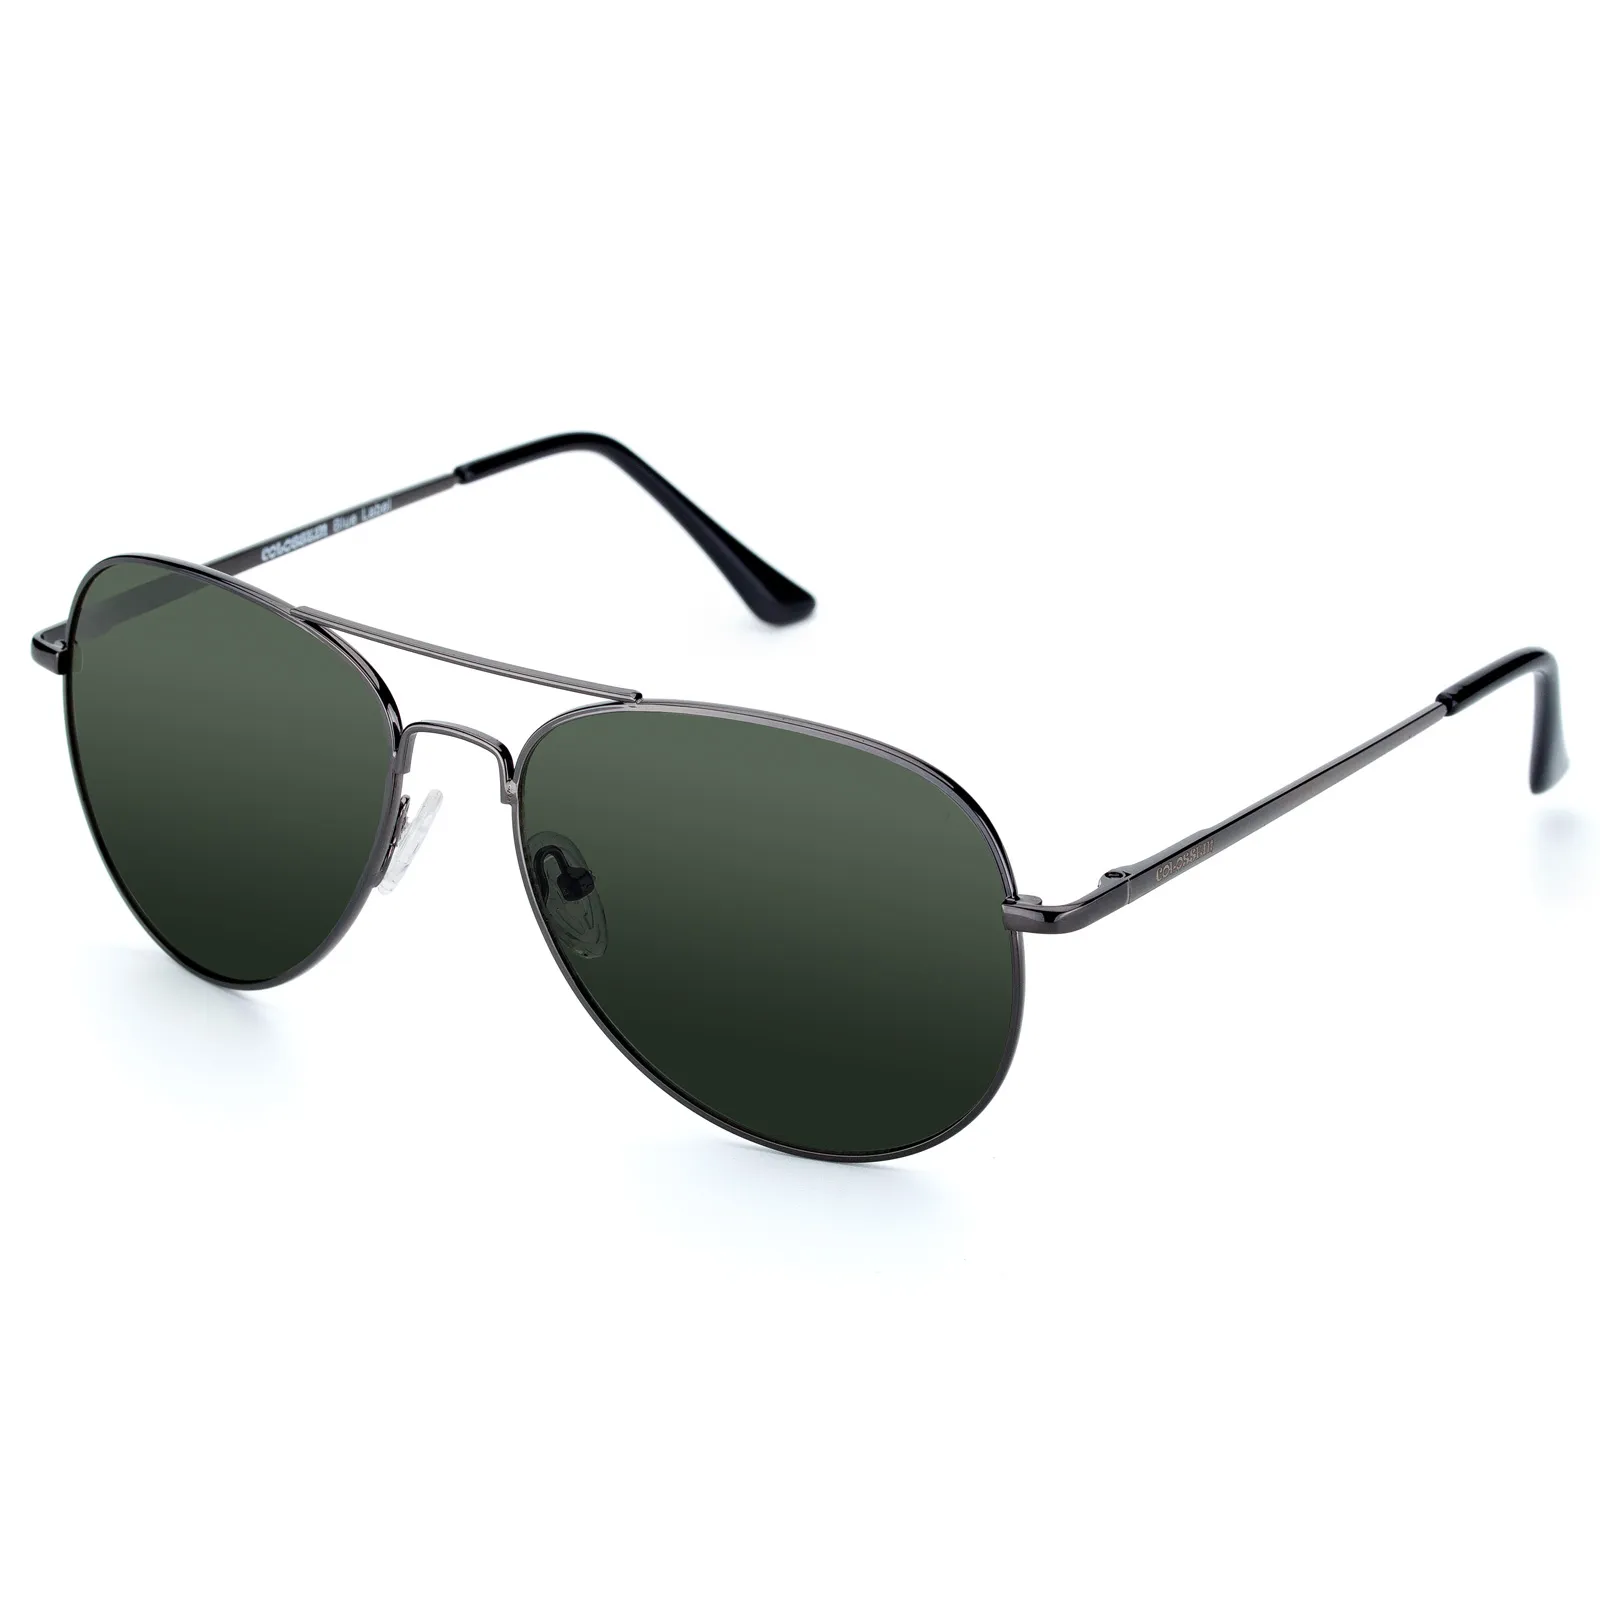 Aviator Sunglasses Night-Vision Driving Glasses Anti-Glare HD Sight Polarized Frame Ultra Light